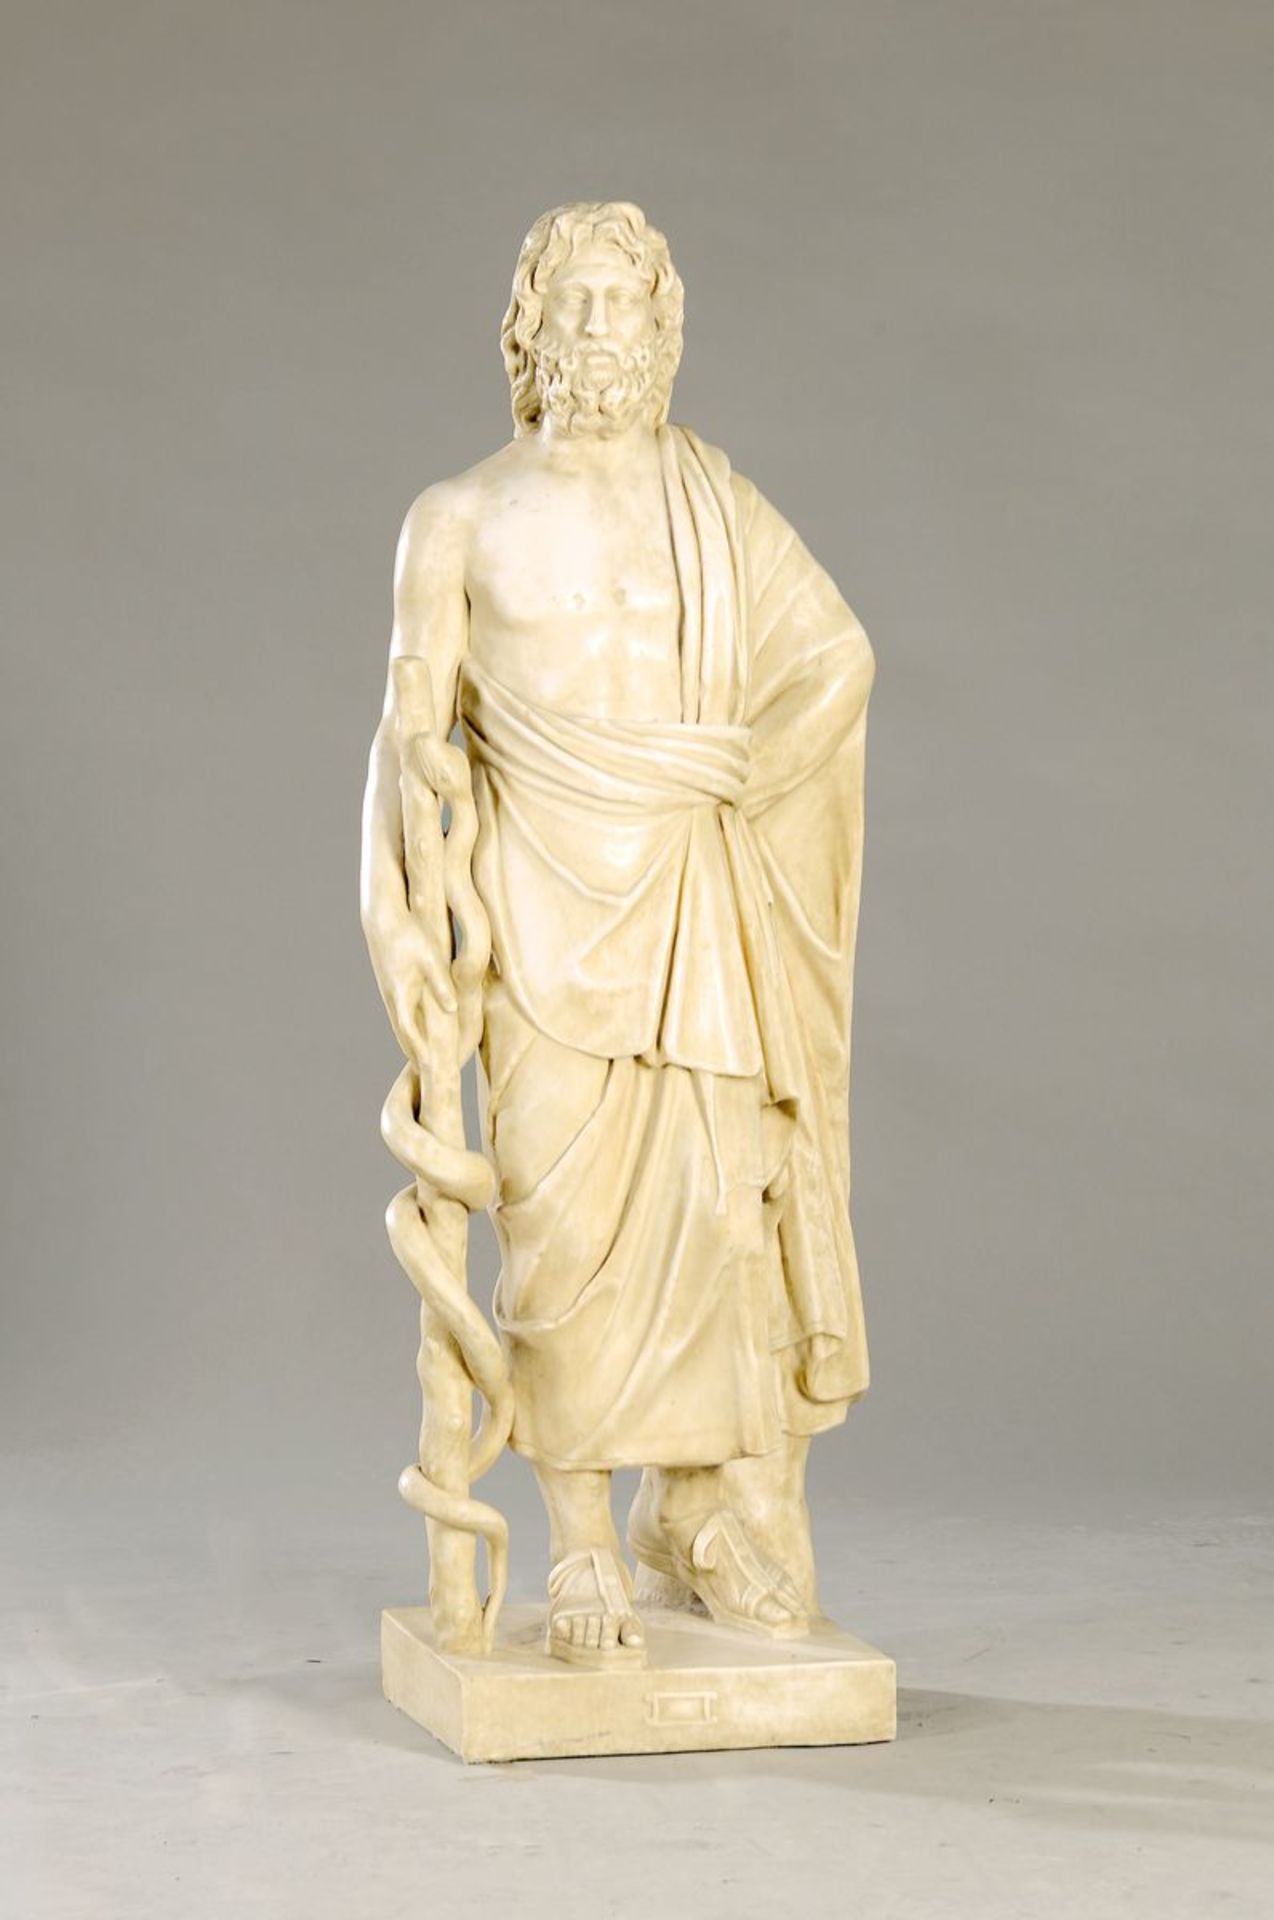 Große Skulptur des Asklepios (Äskulap), antiker Gott der